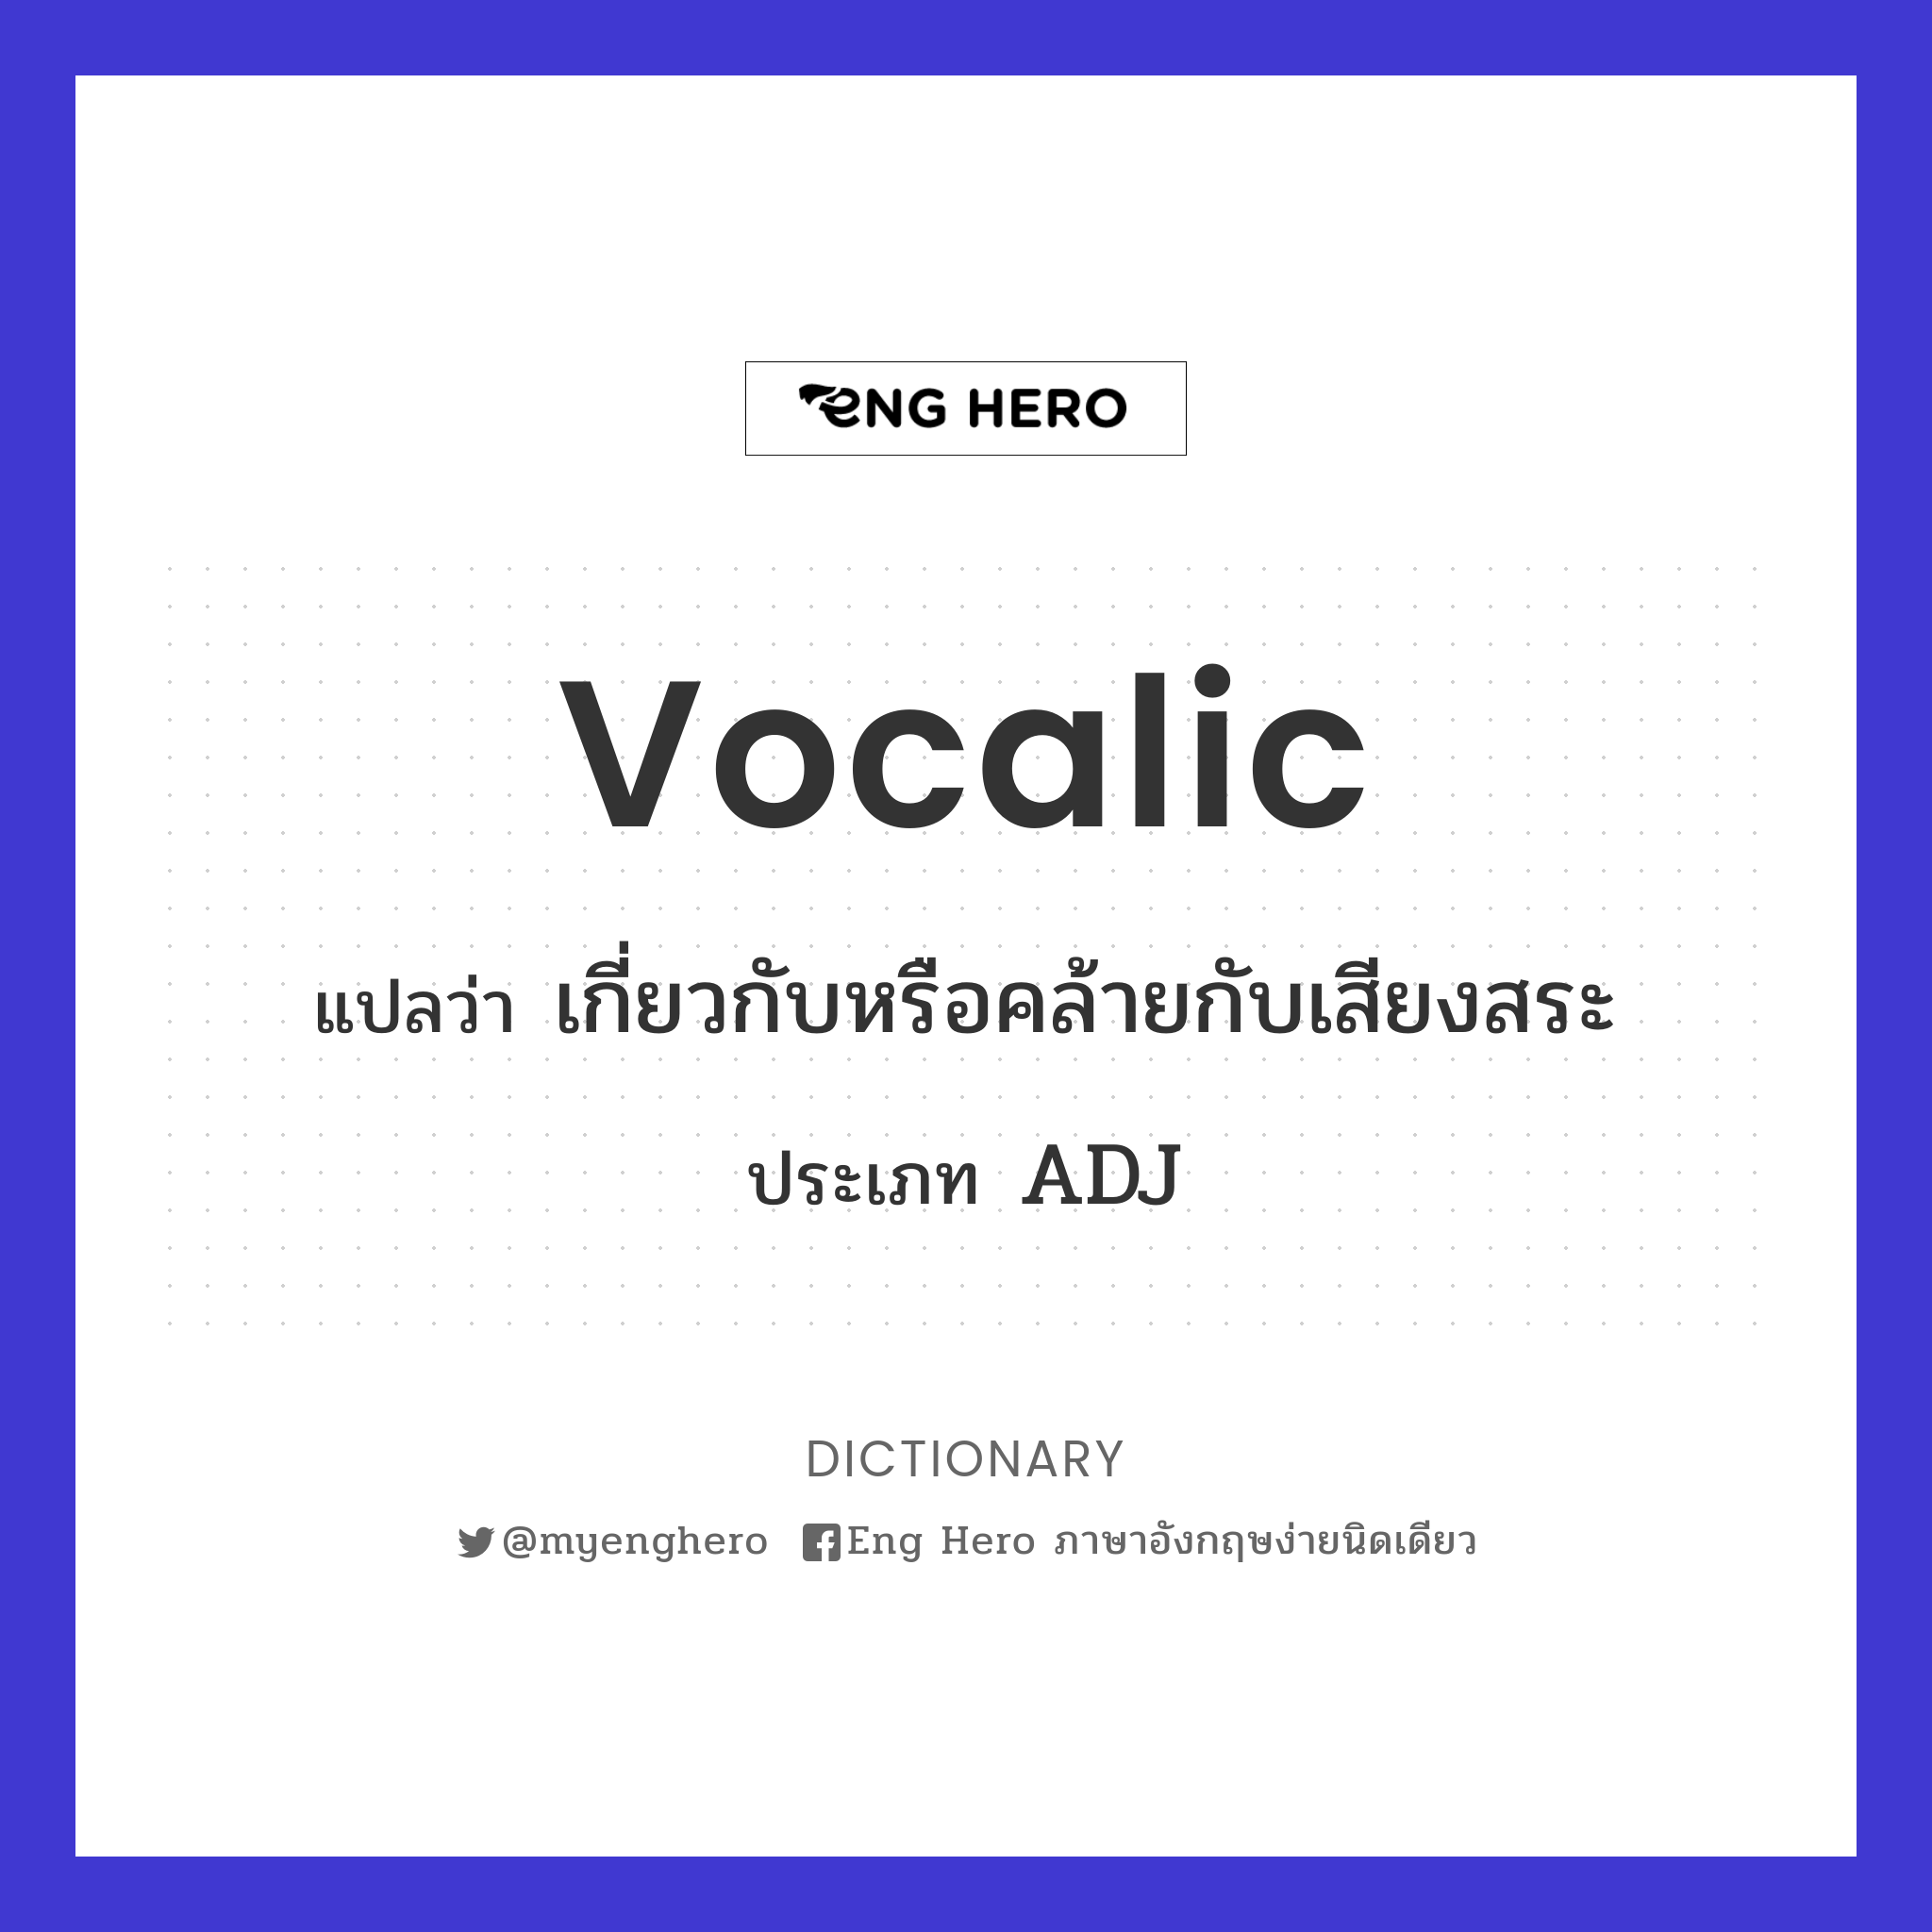 vocalic